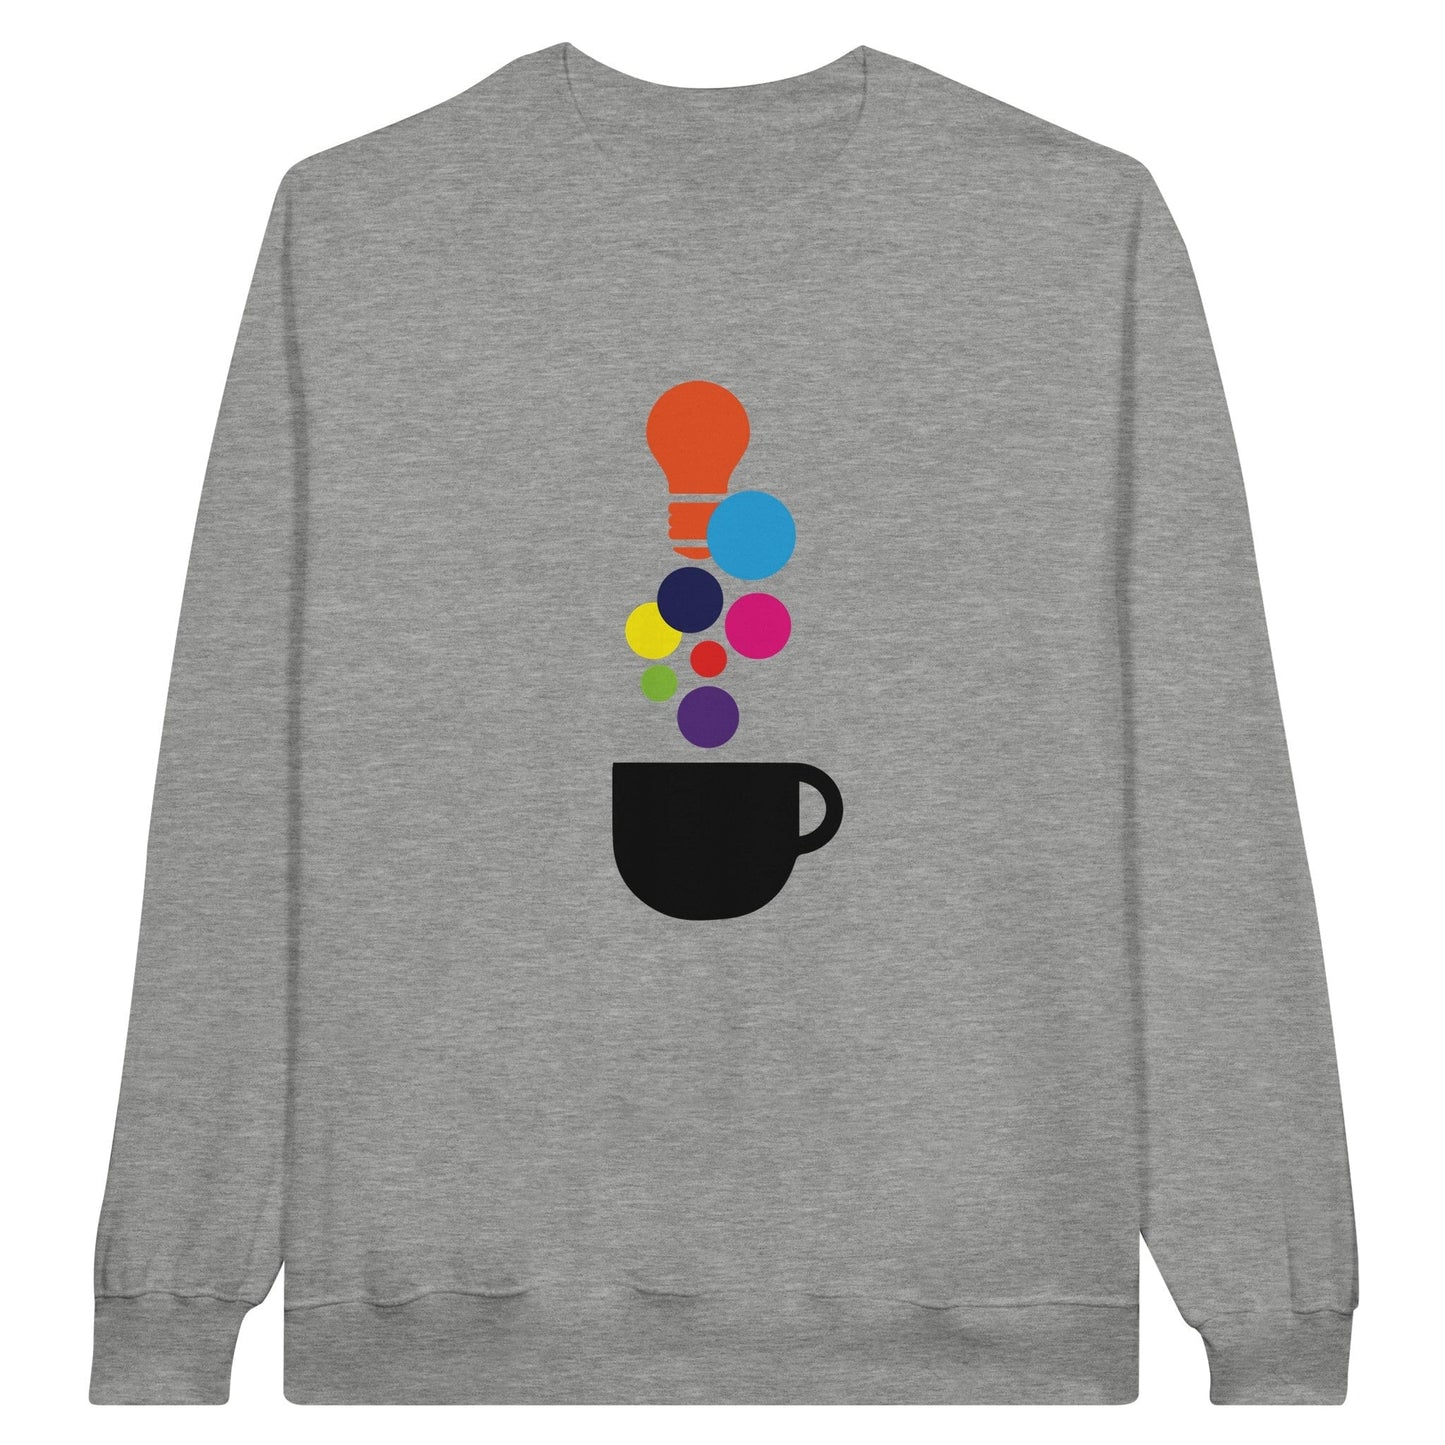 Good Bean Gifts "Creativity in a Cup" - Classic Unisex Crewneck Sweatshirt S / Ash